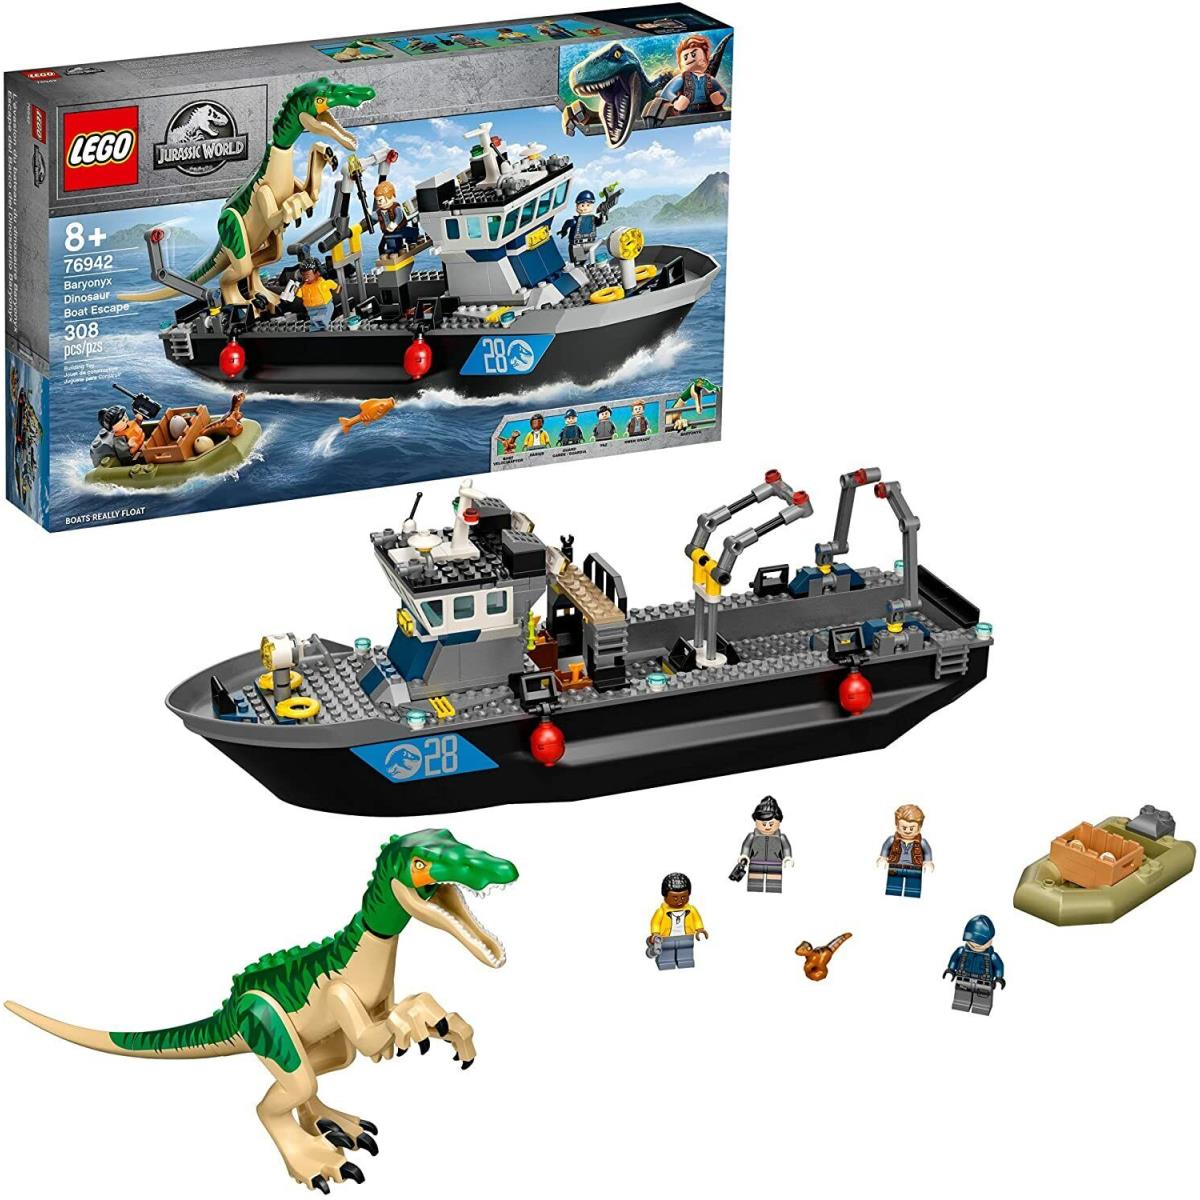 Lego Jurassic World 76942 8+ Baryonyx Dinosaur Boat Escape 308 Pieces